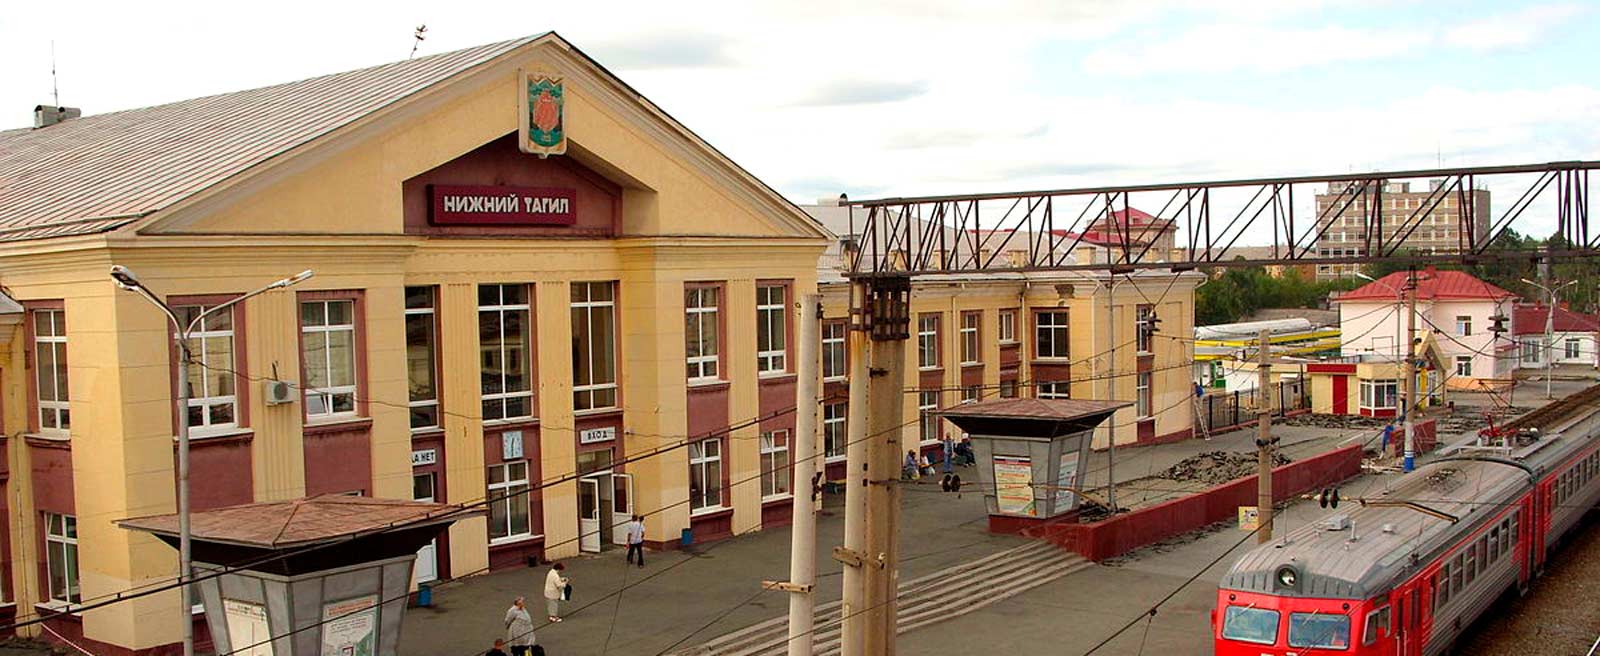 Вокзал Нижний Тагил